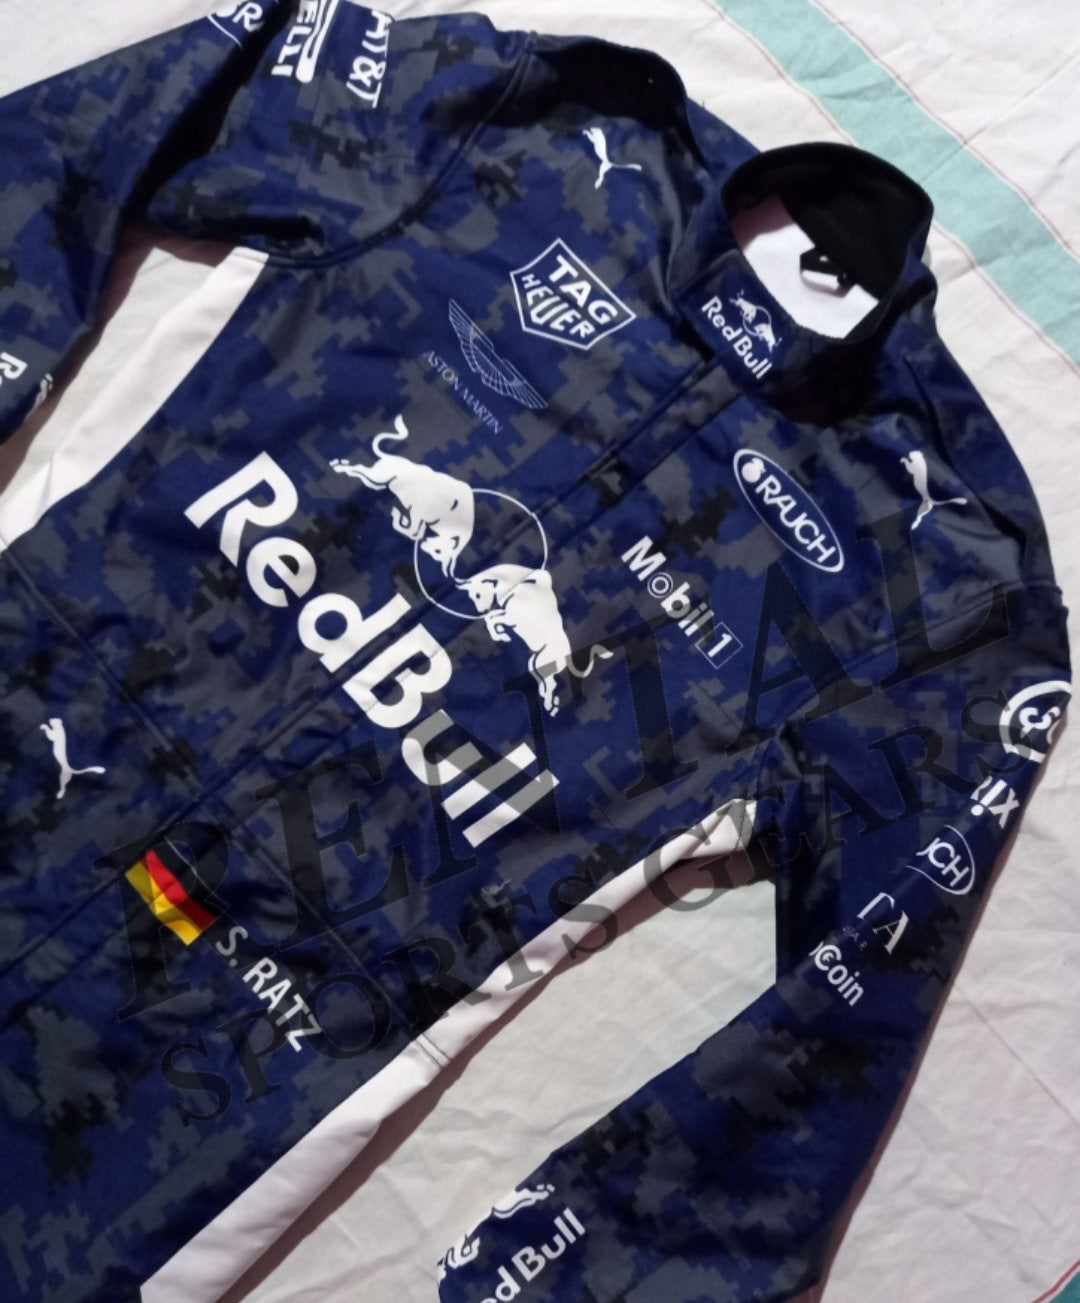 Max Verstappen Cammo 2016 Redbull Race Suit - F1 race suit